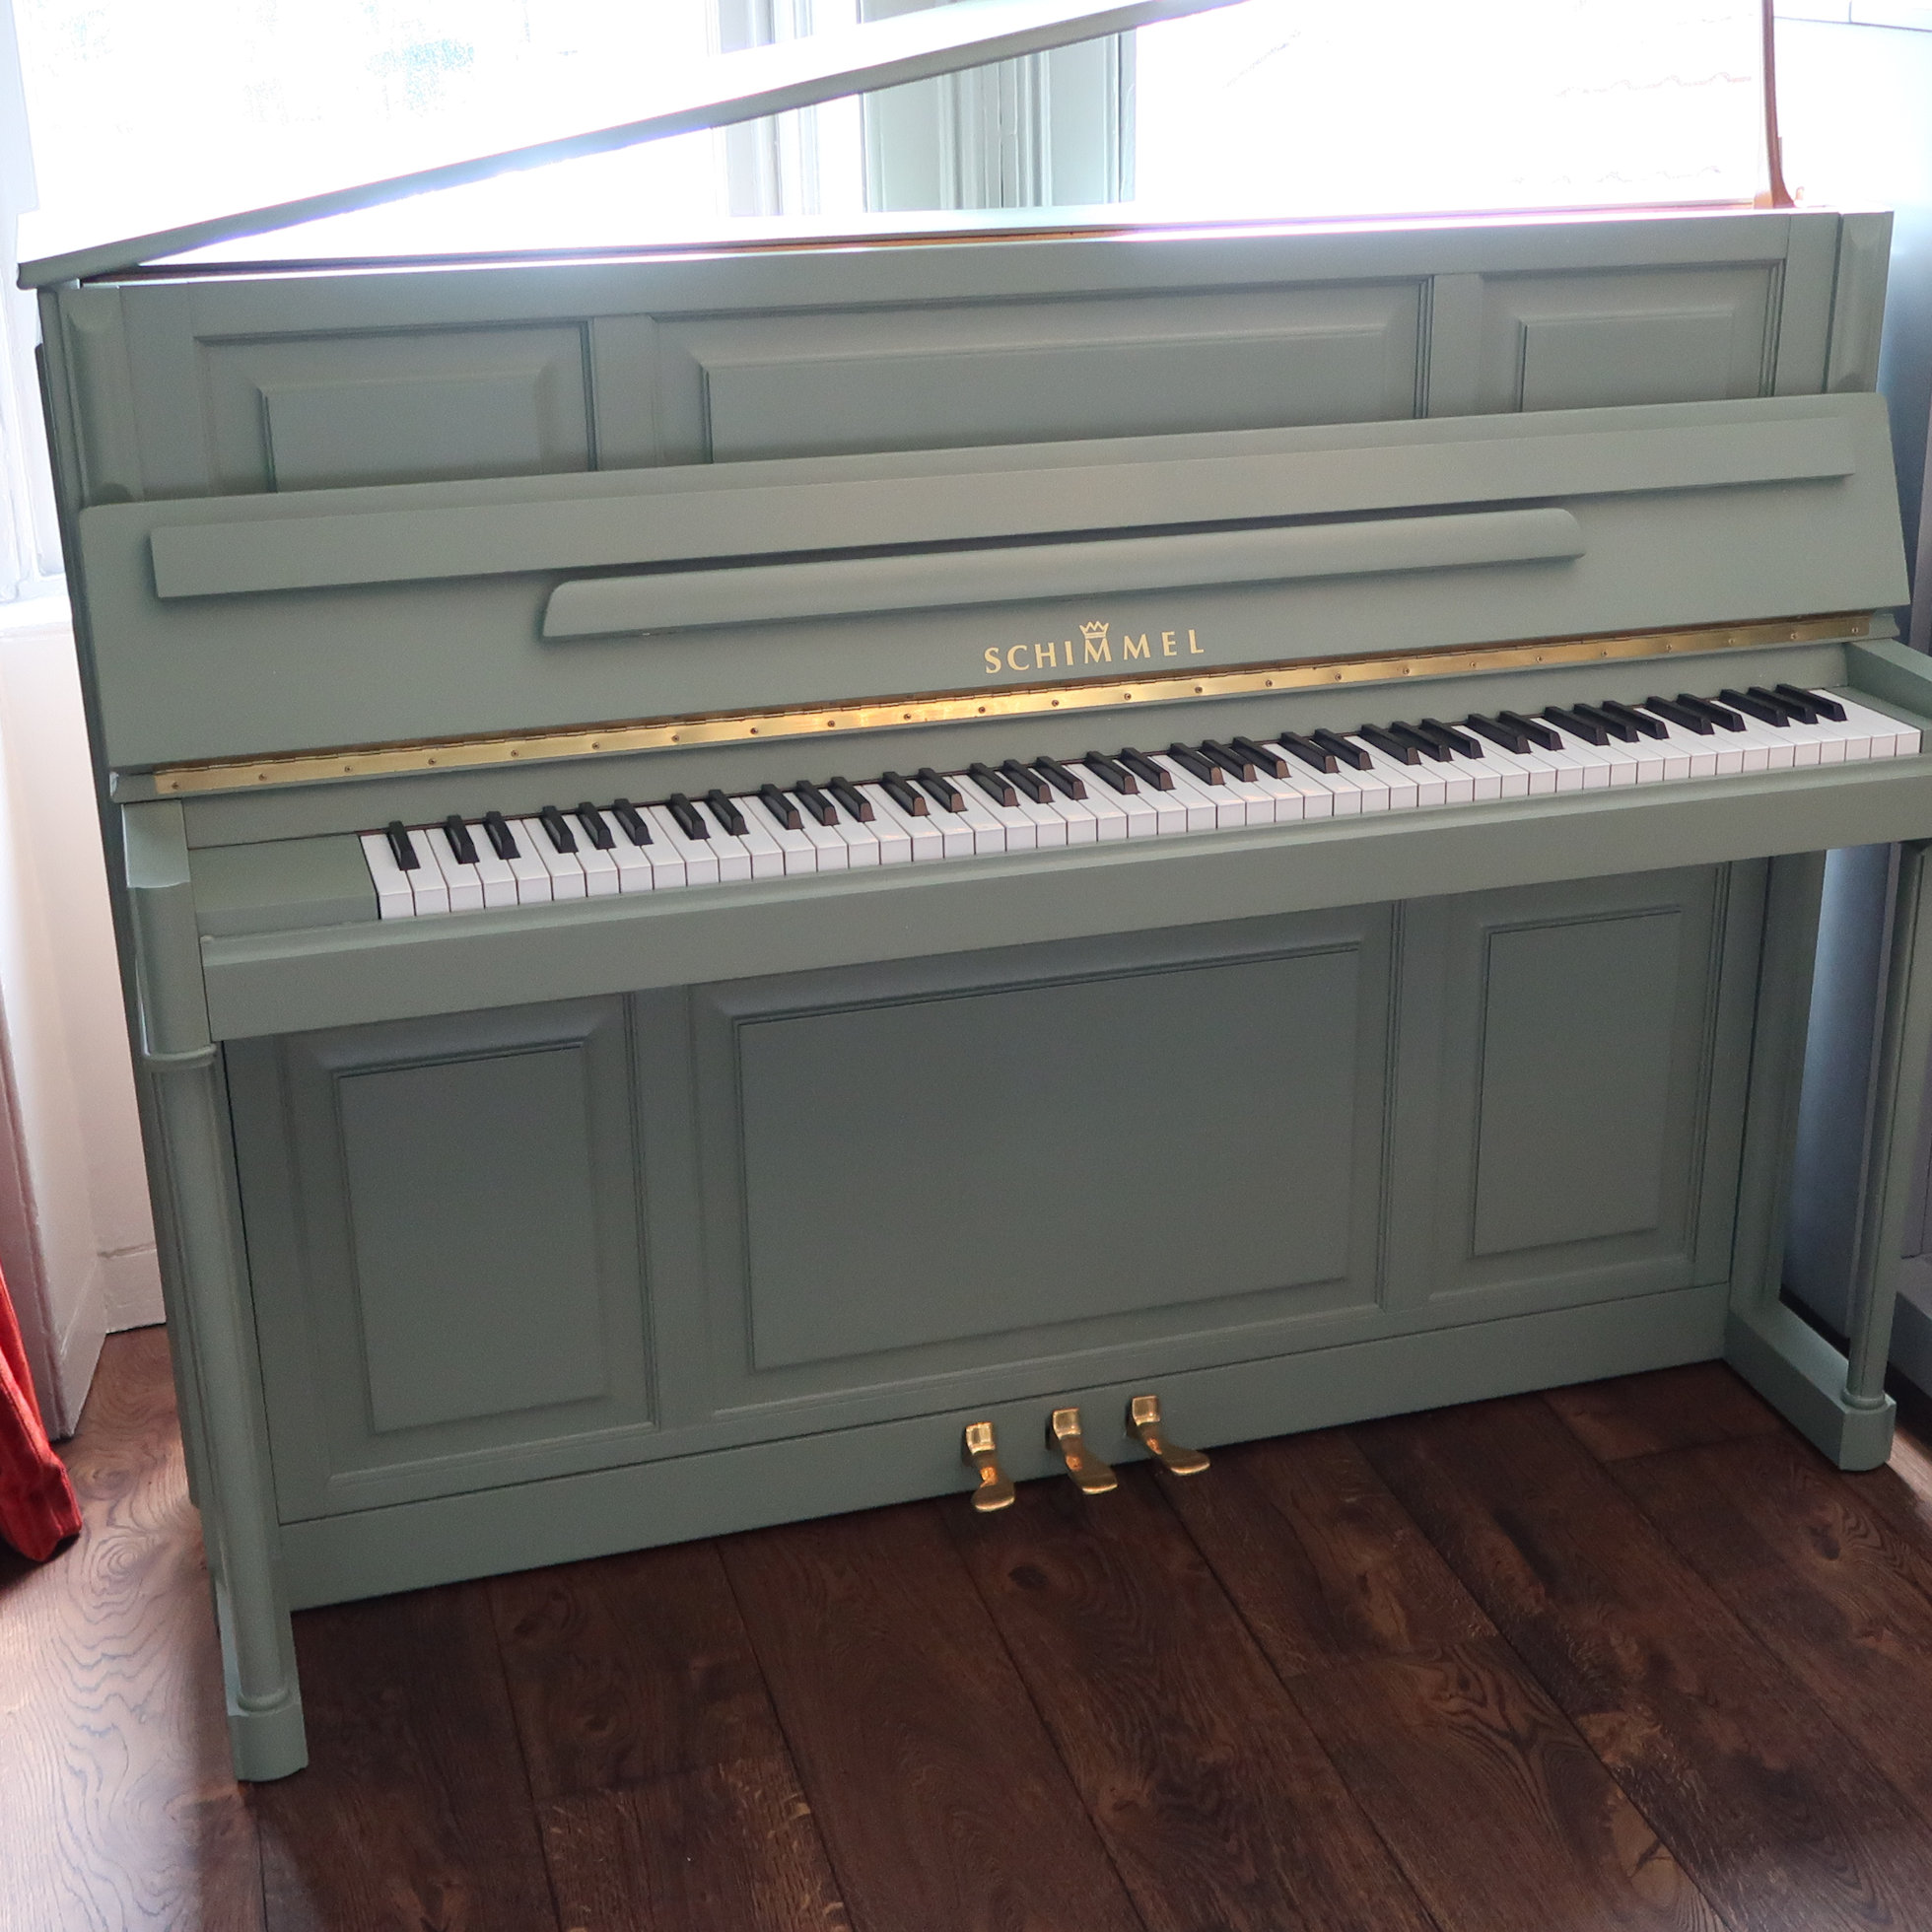 Schimmel Model 114 Painted Piano